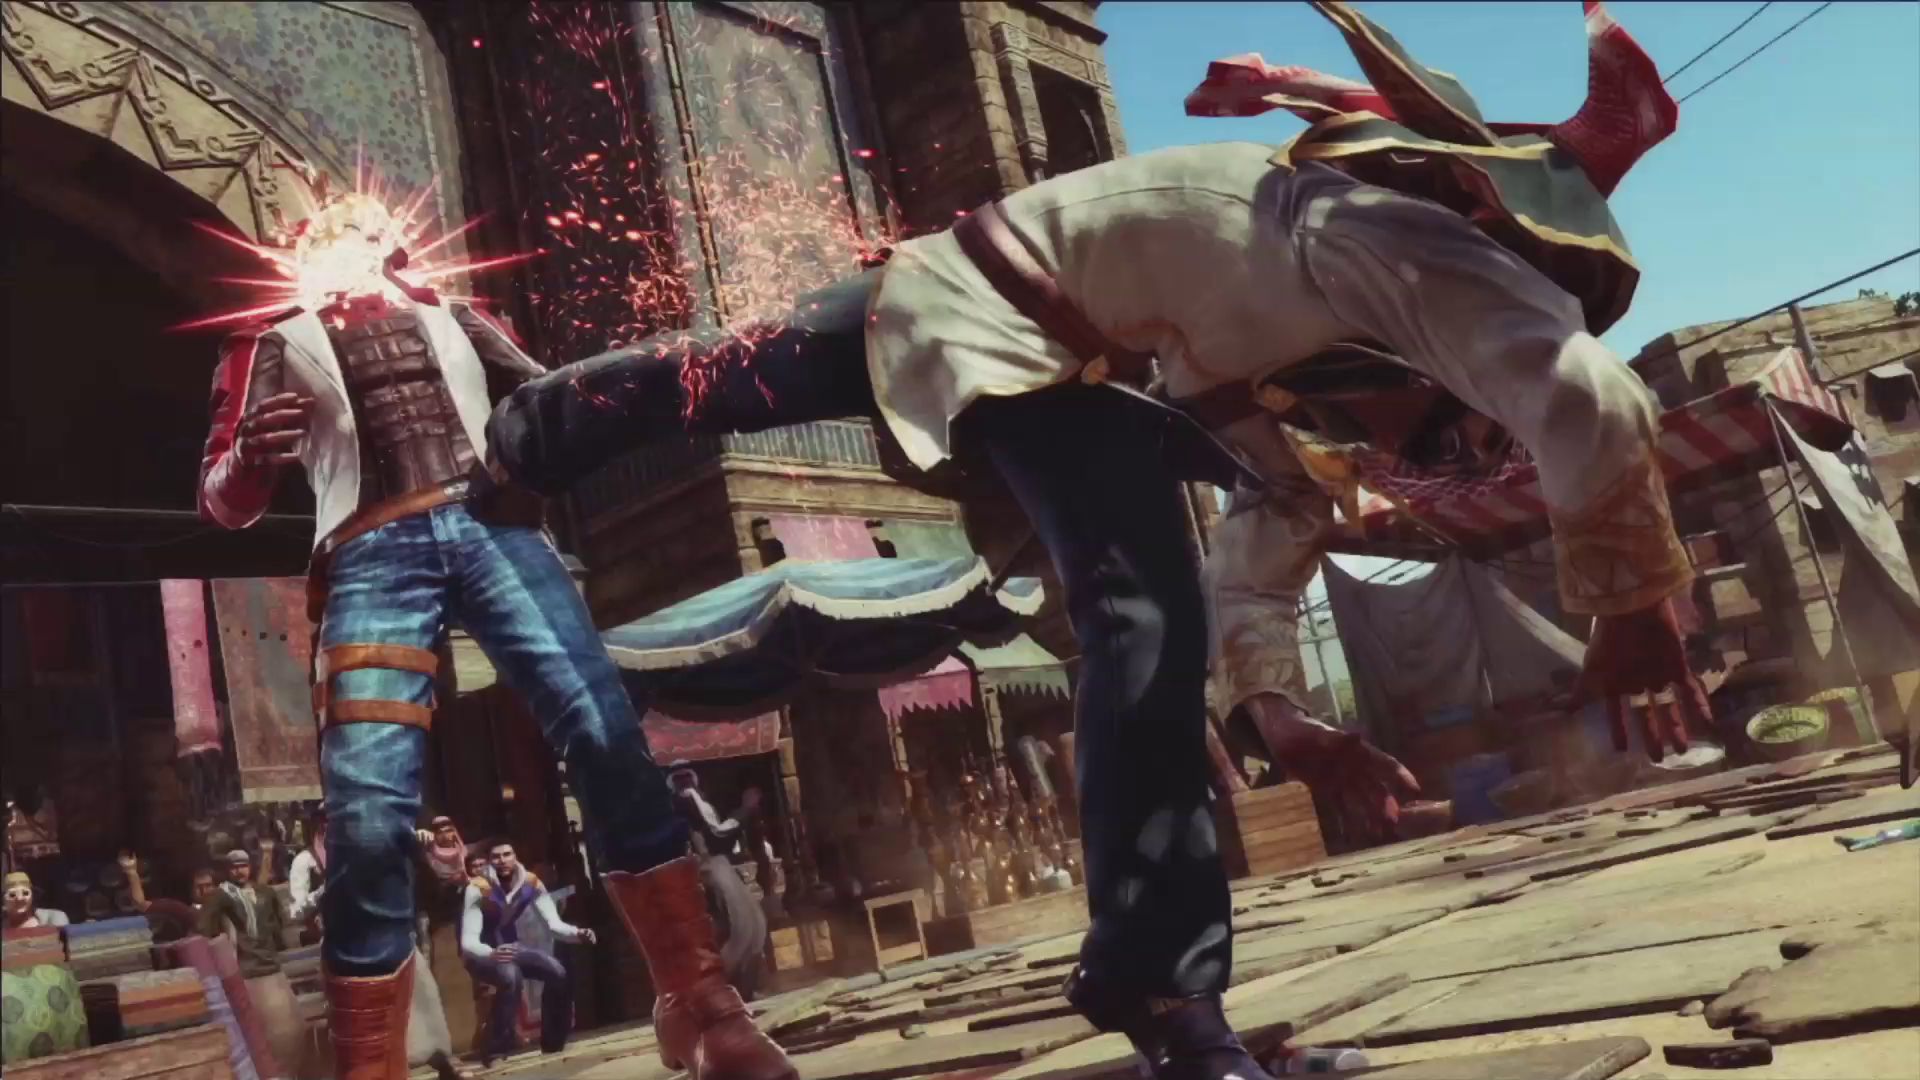 Tekken 7 Finally Launch on PlayStation 4, Based on Unreal 4 Engine